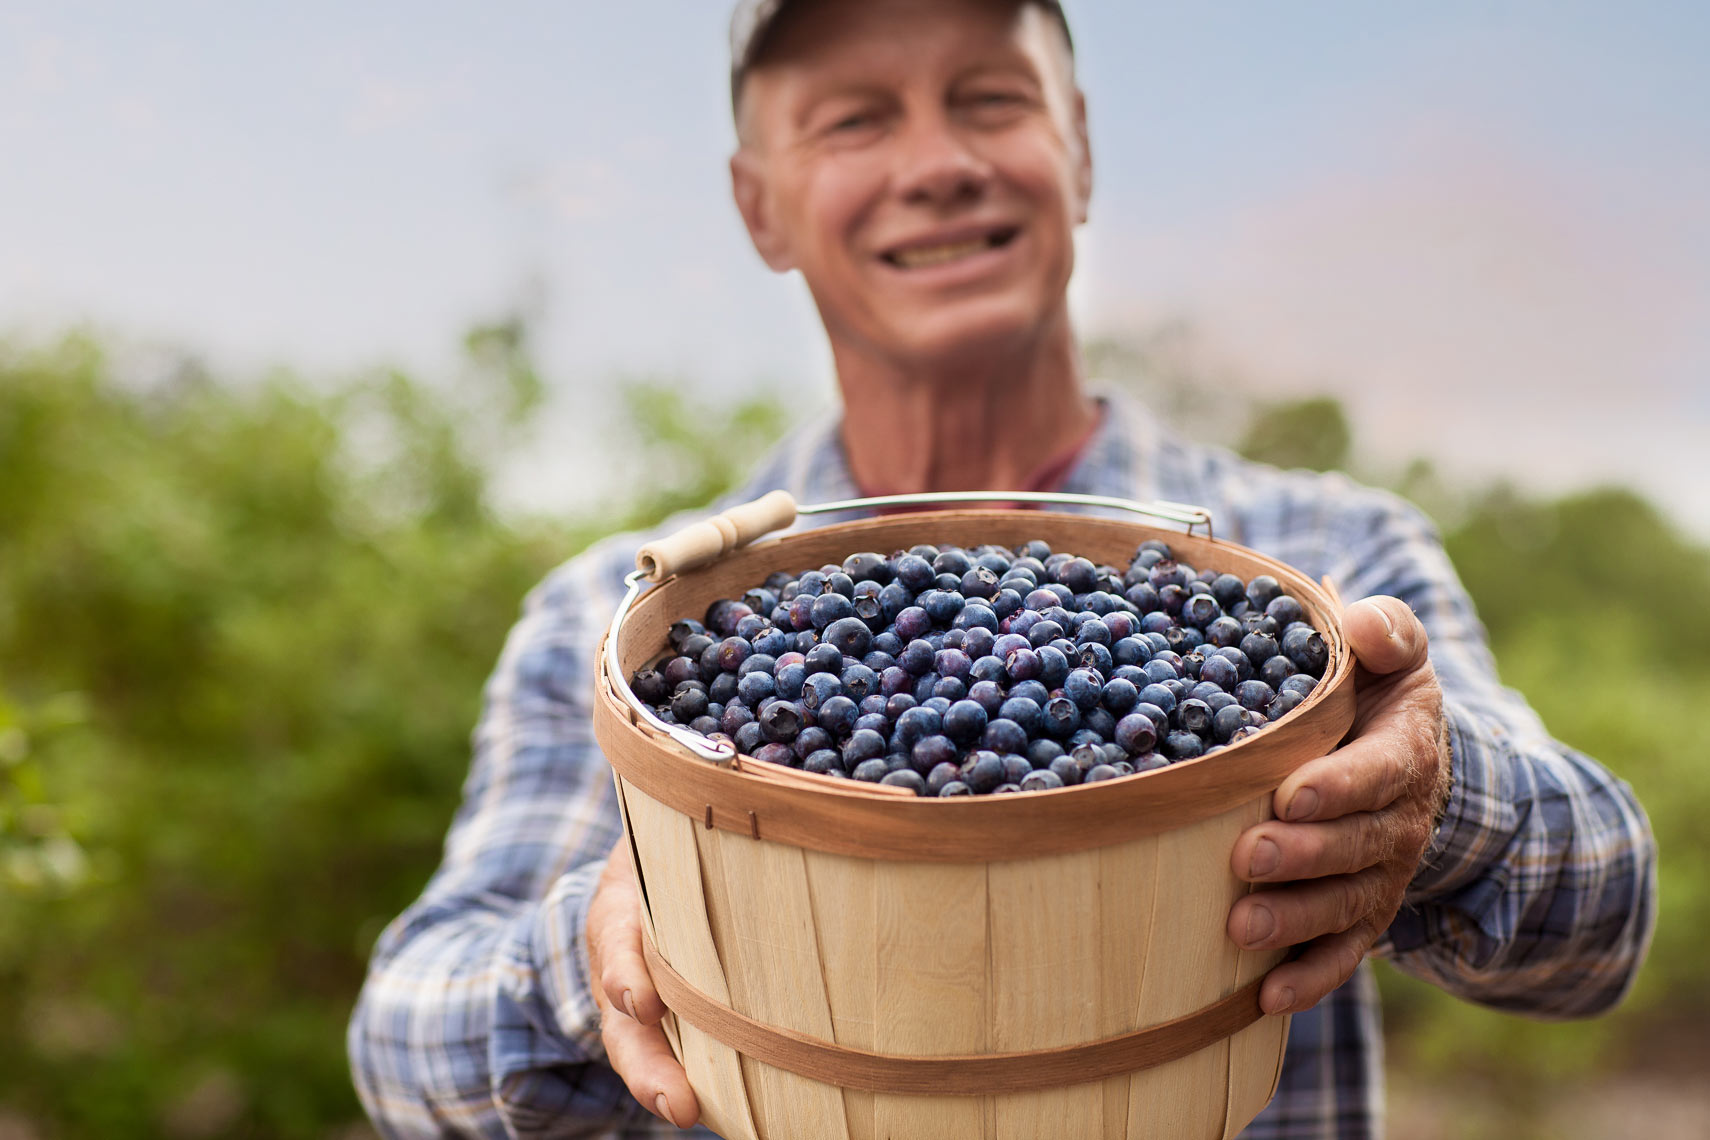 heb-blueberries-produce-department-jason-risner-photography-8696